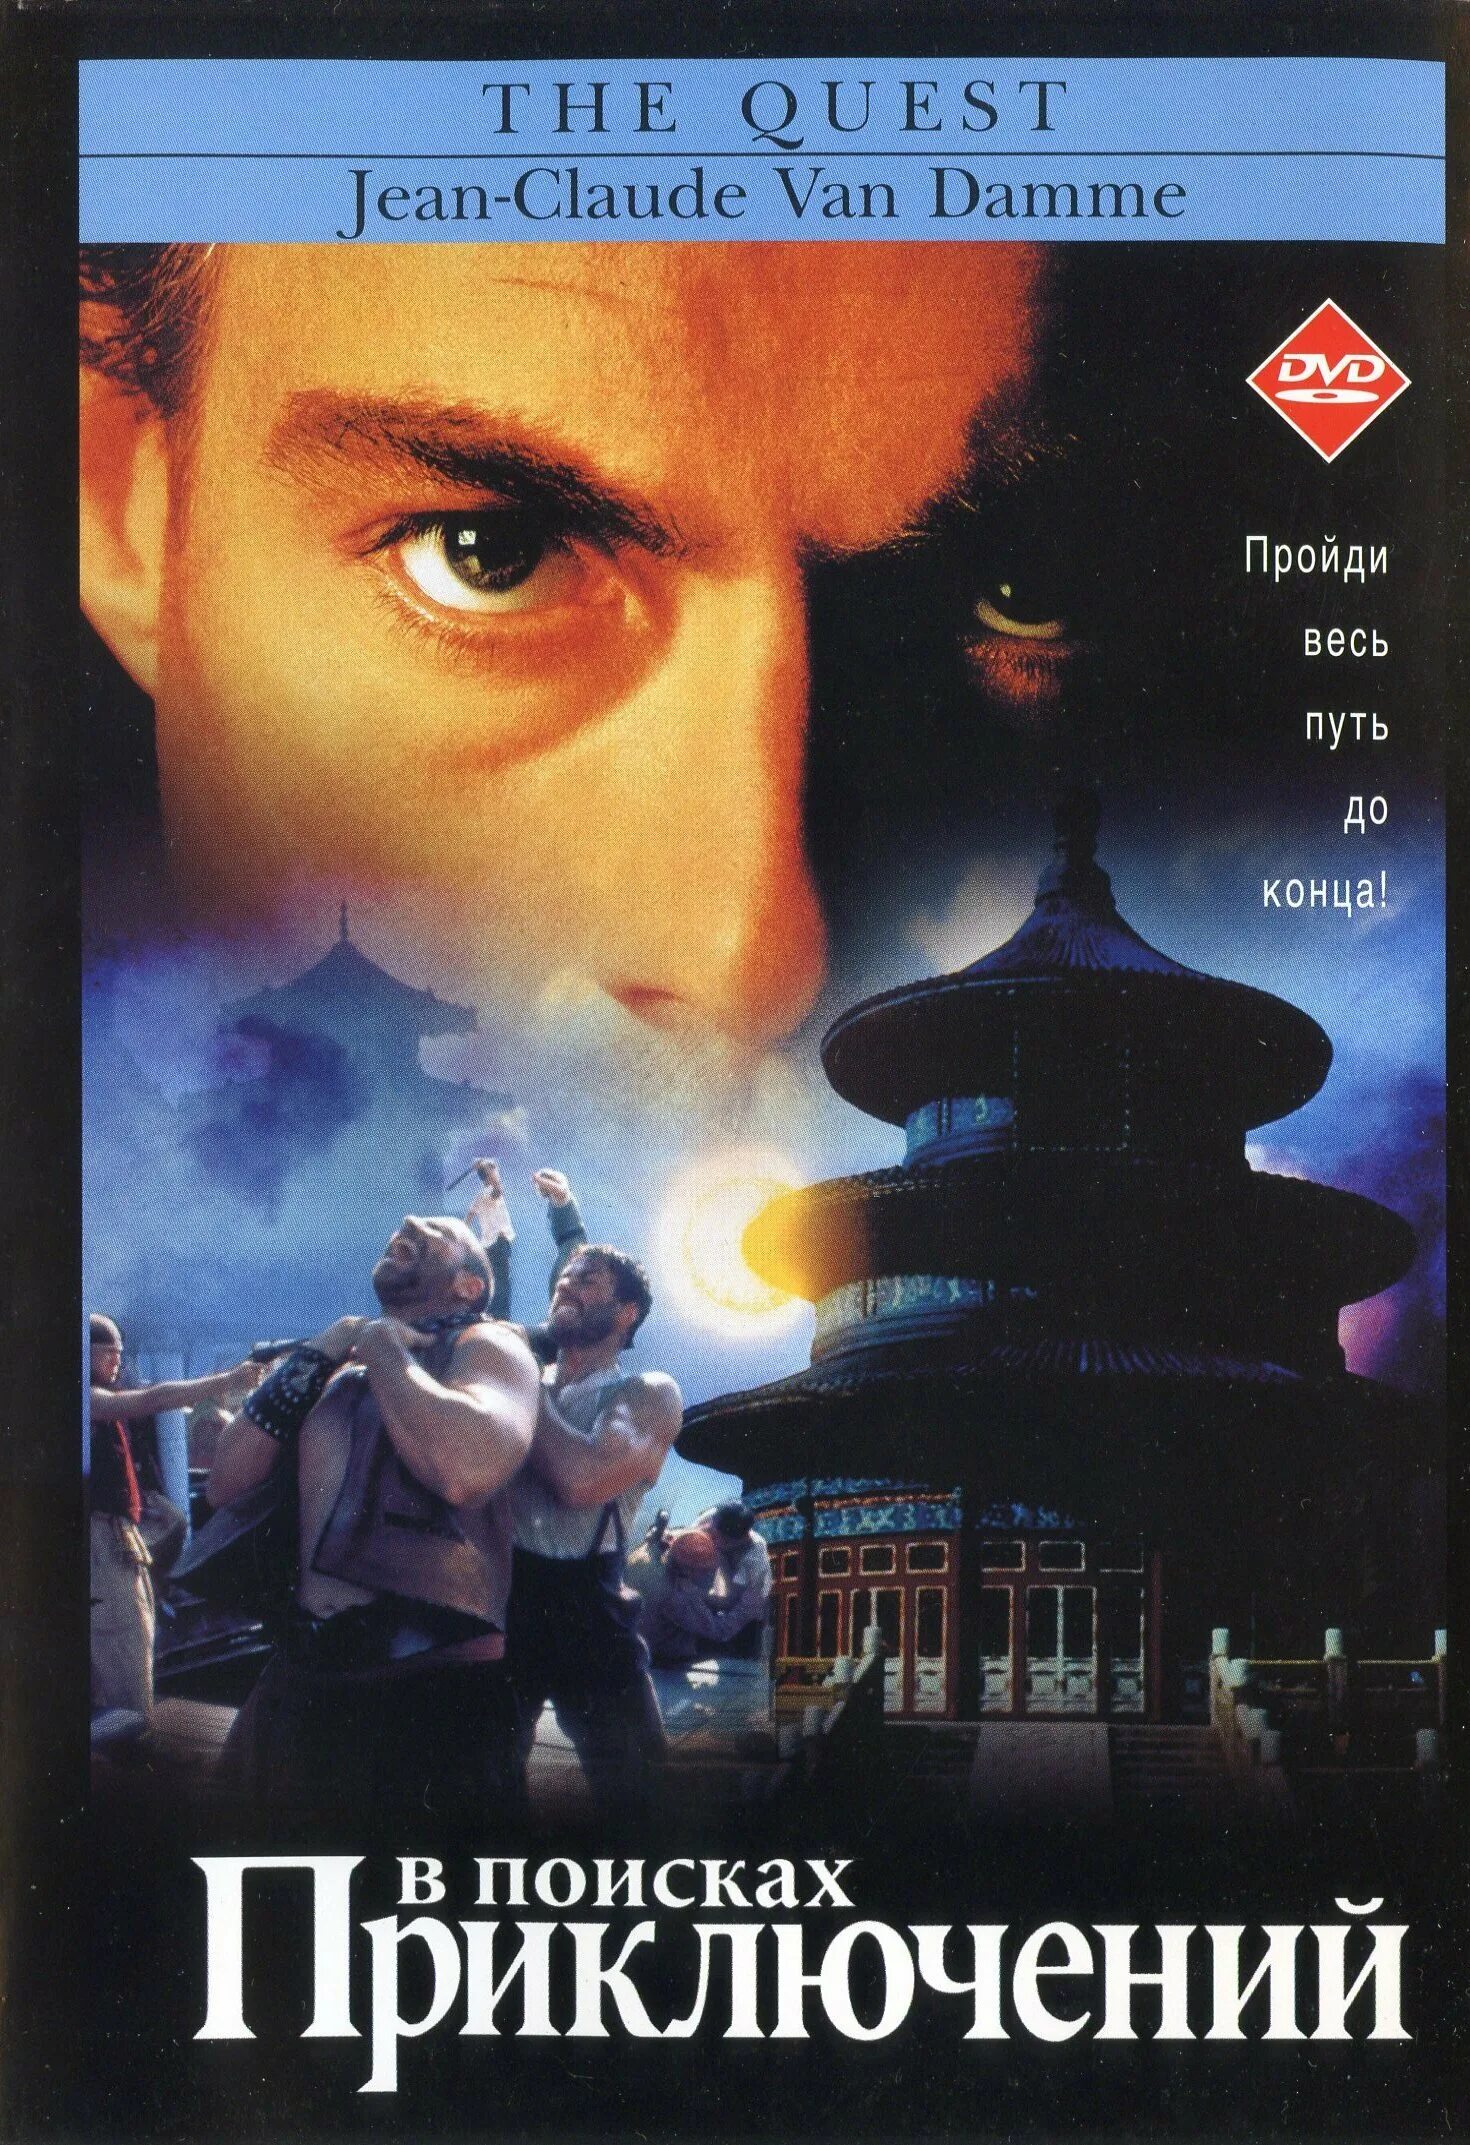 Поиск обложки. В поисках приключений 1996 the Quest. Обложки --в поисках приключений(1996). Постер к фильму в поисках приключений.